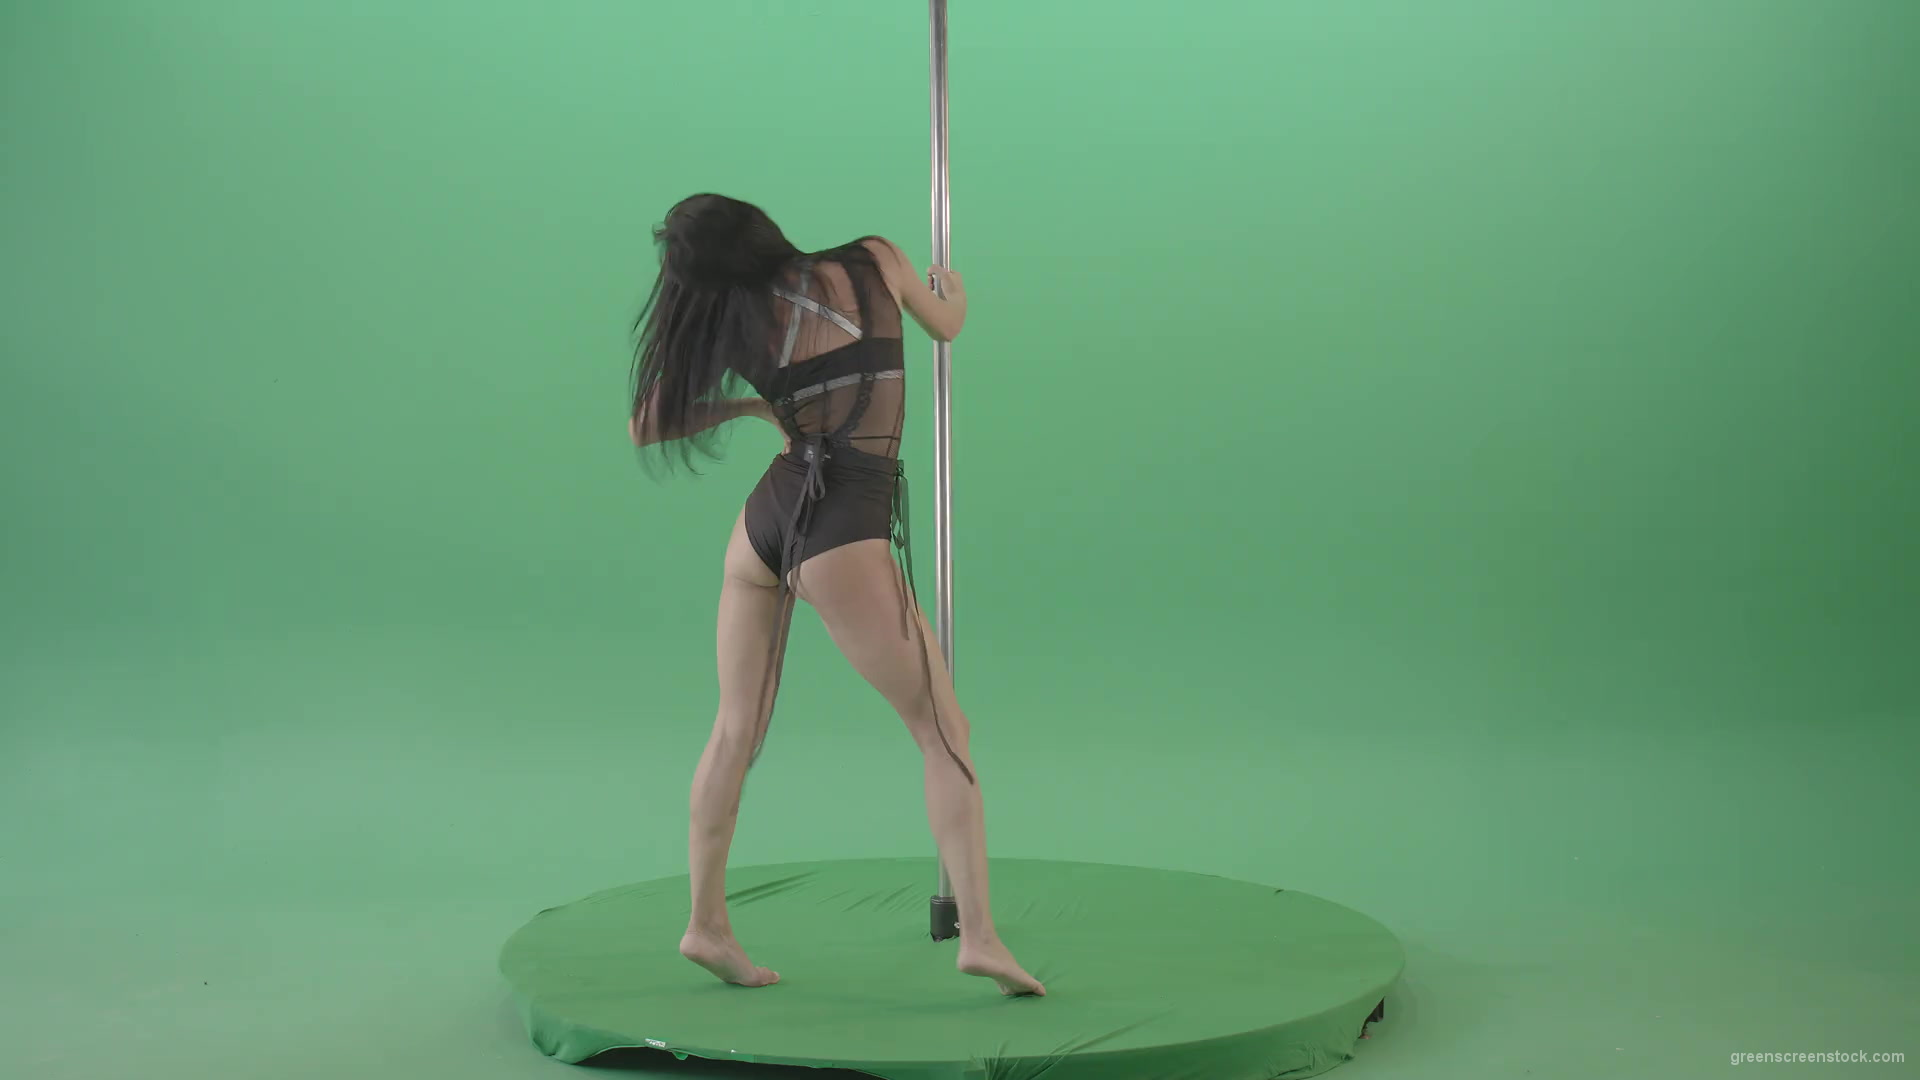 Strip pole dancing video